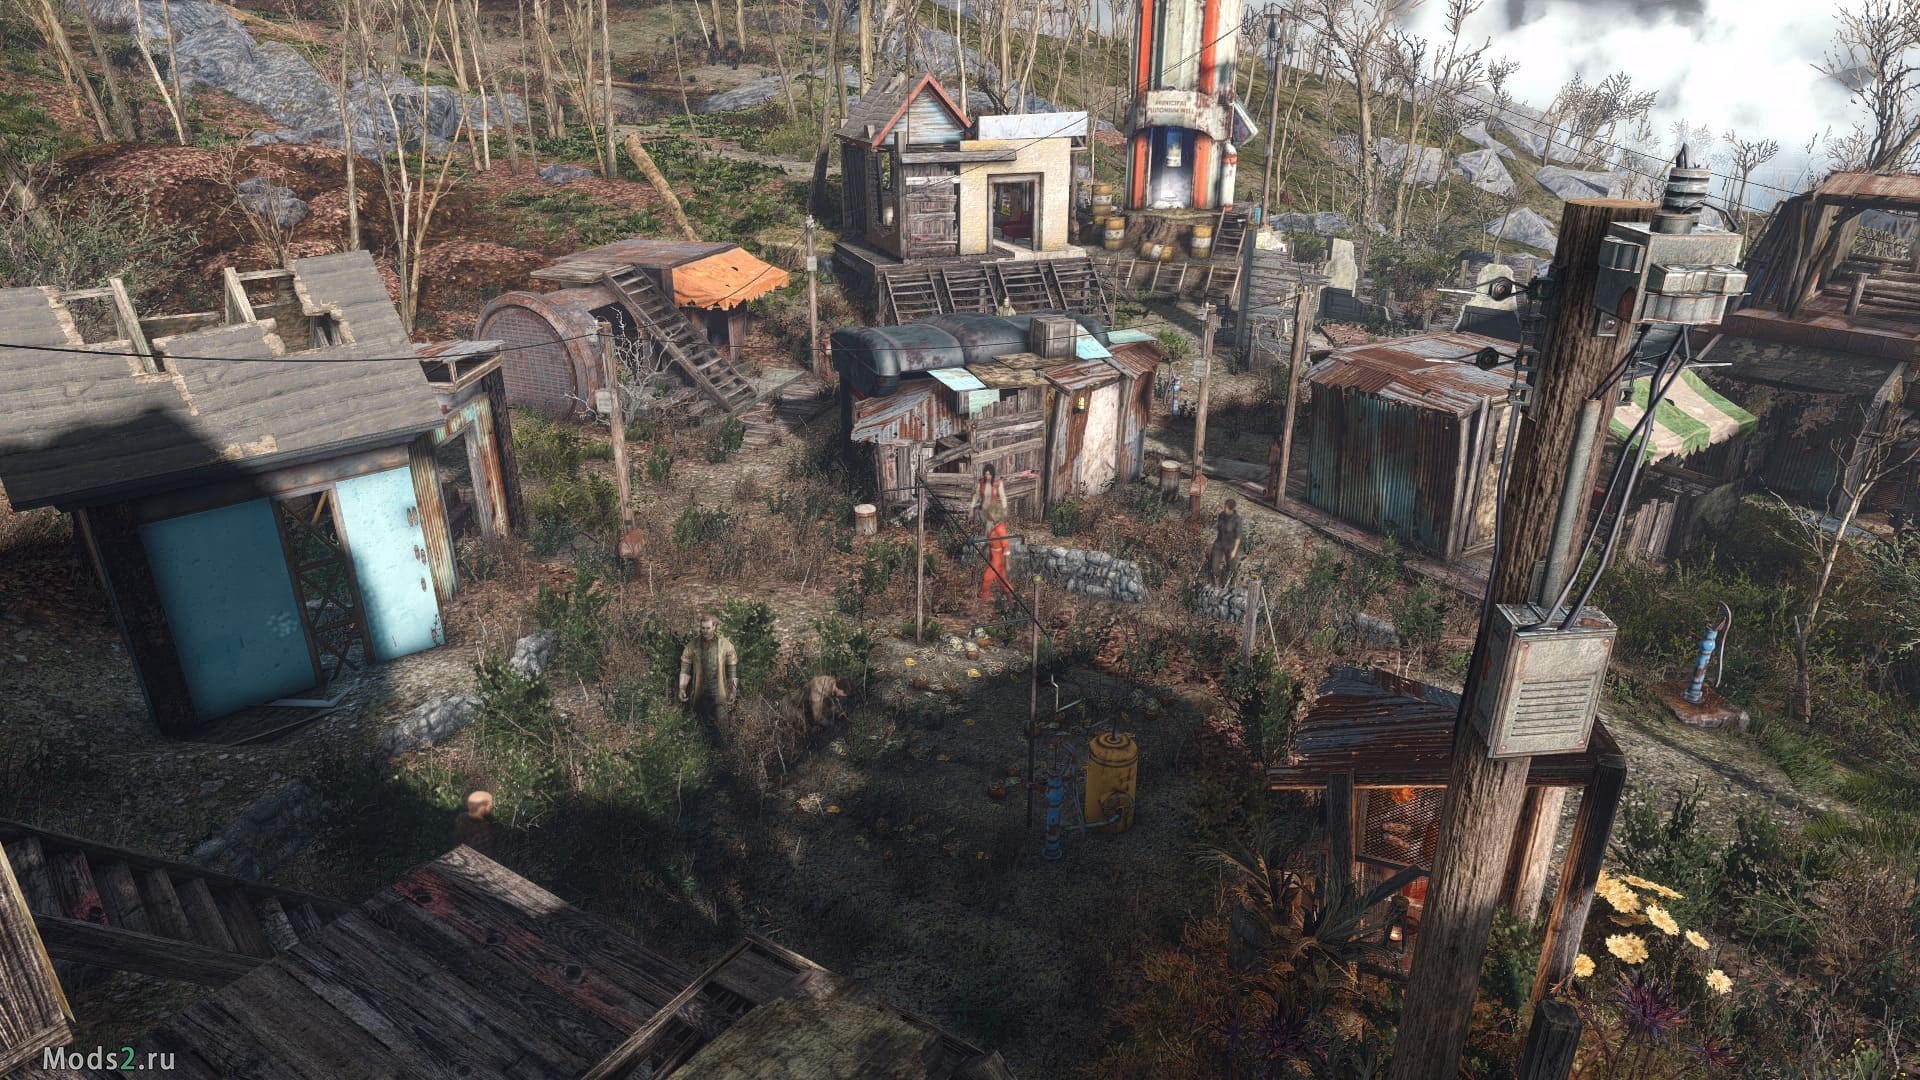 Fallout 4 sims settlement 2 rus фото 83